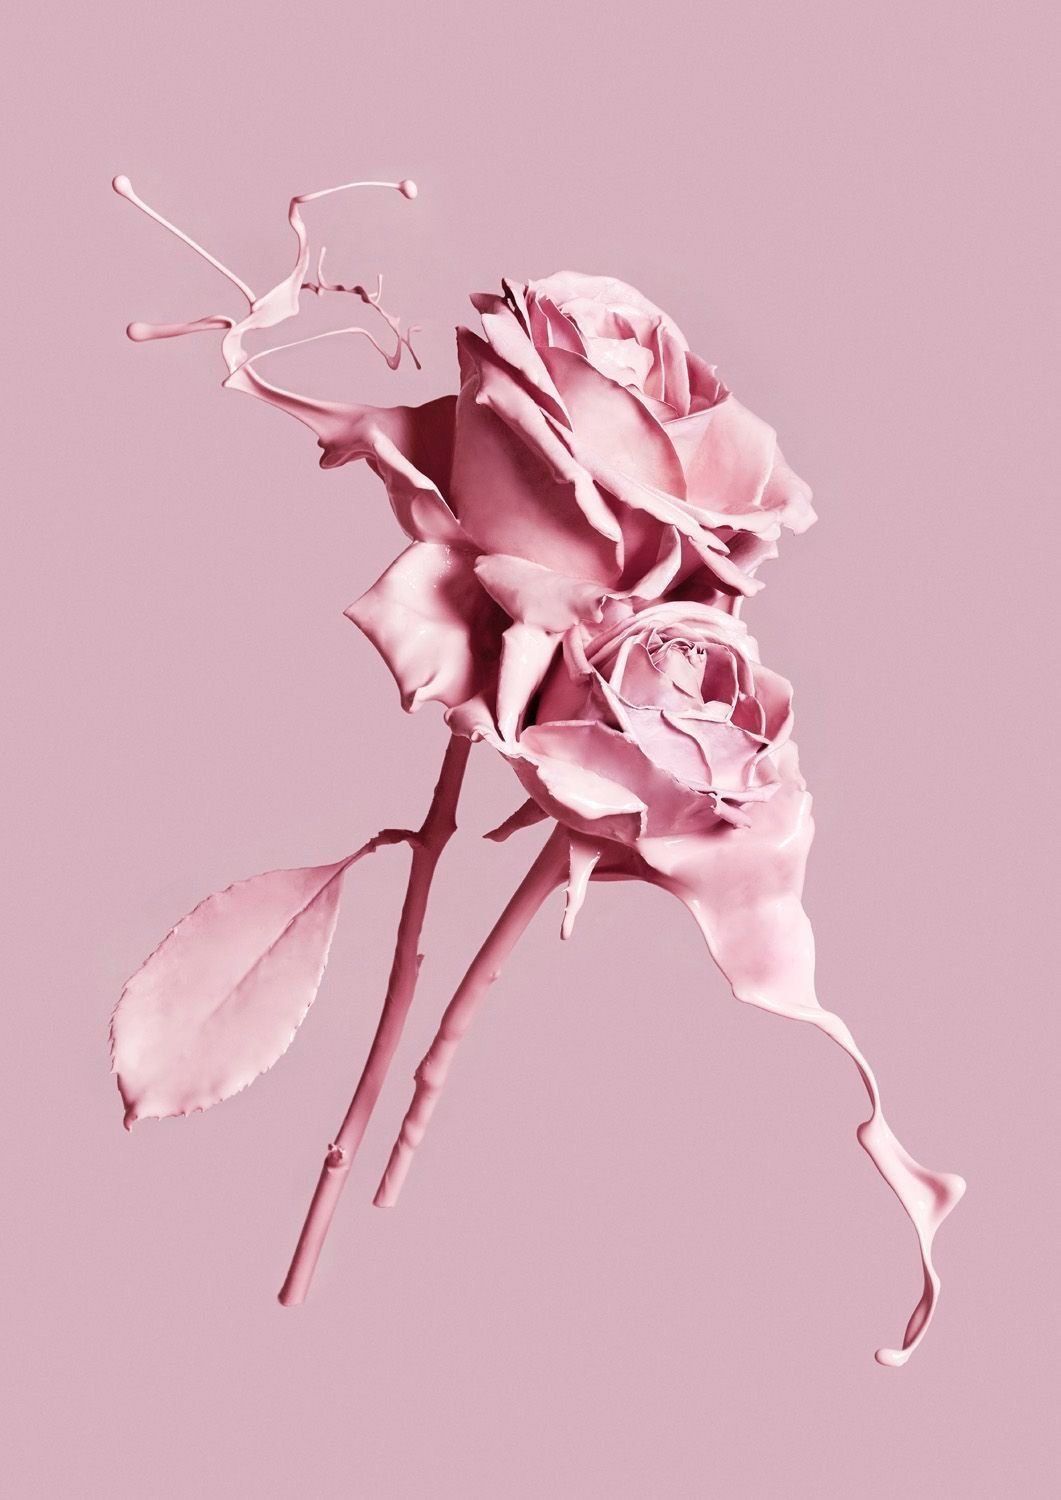 Aesthetic Pink Rose Wallpaper iPhone